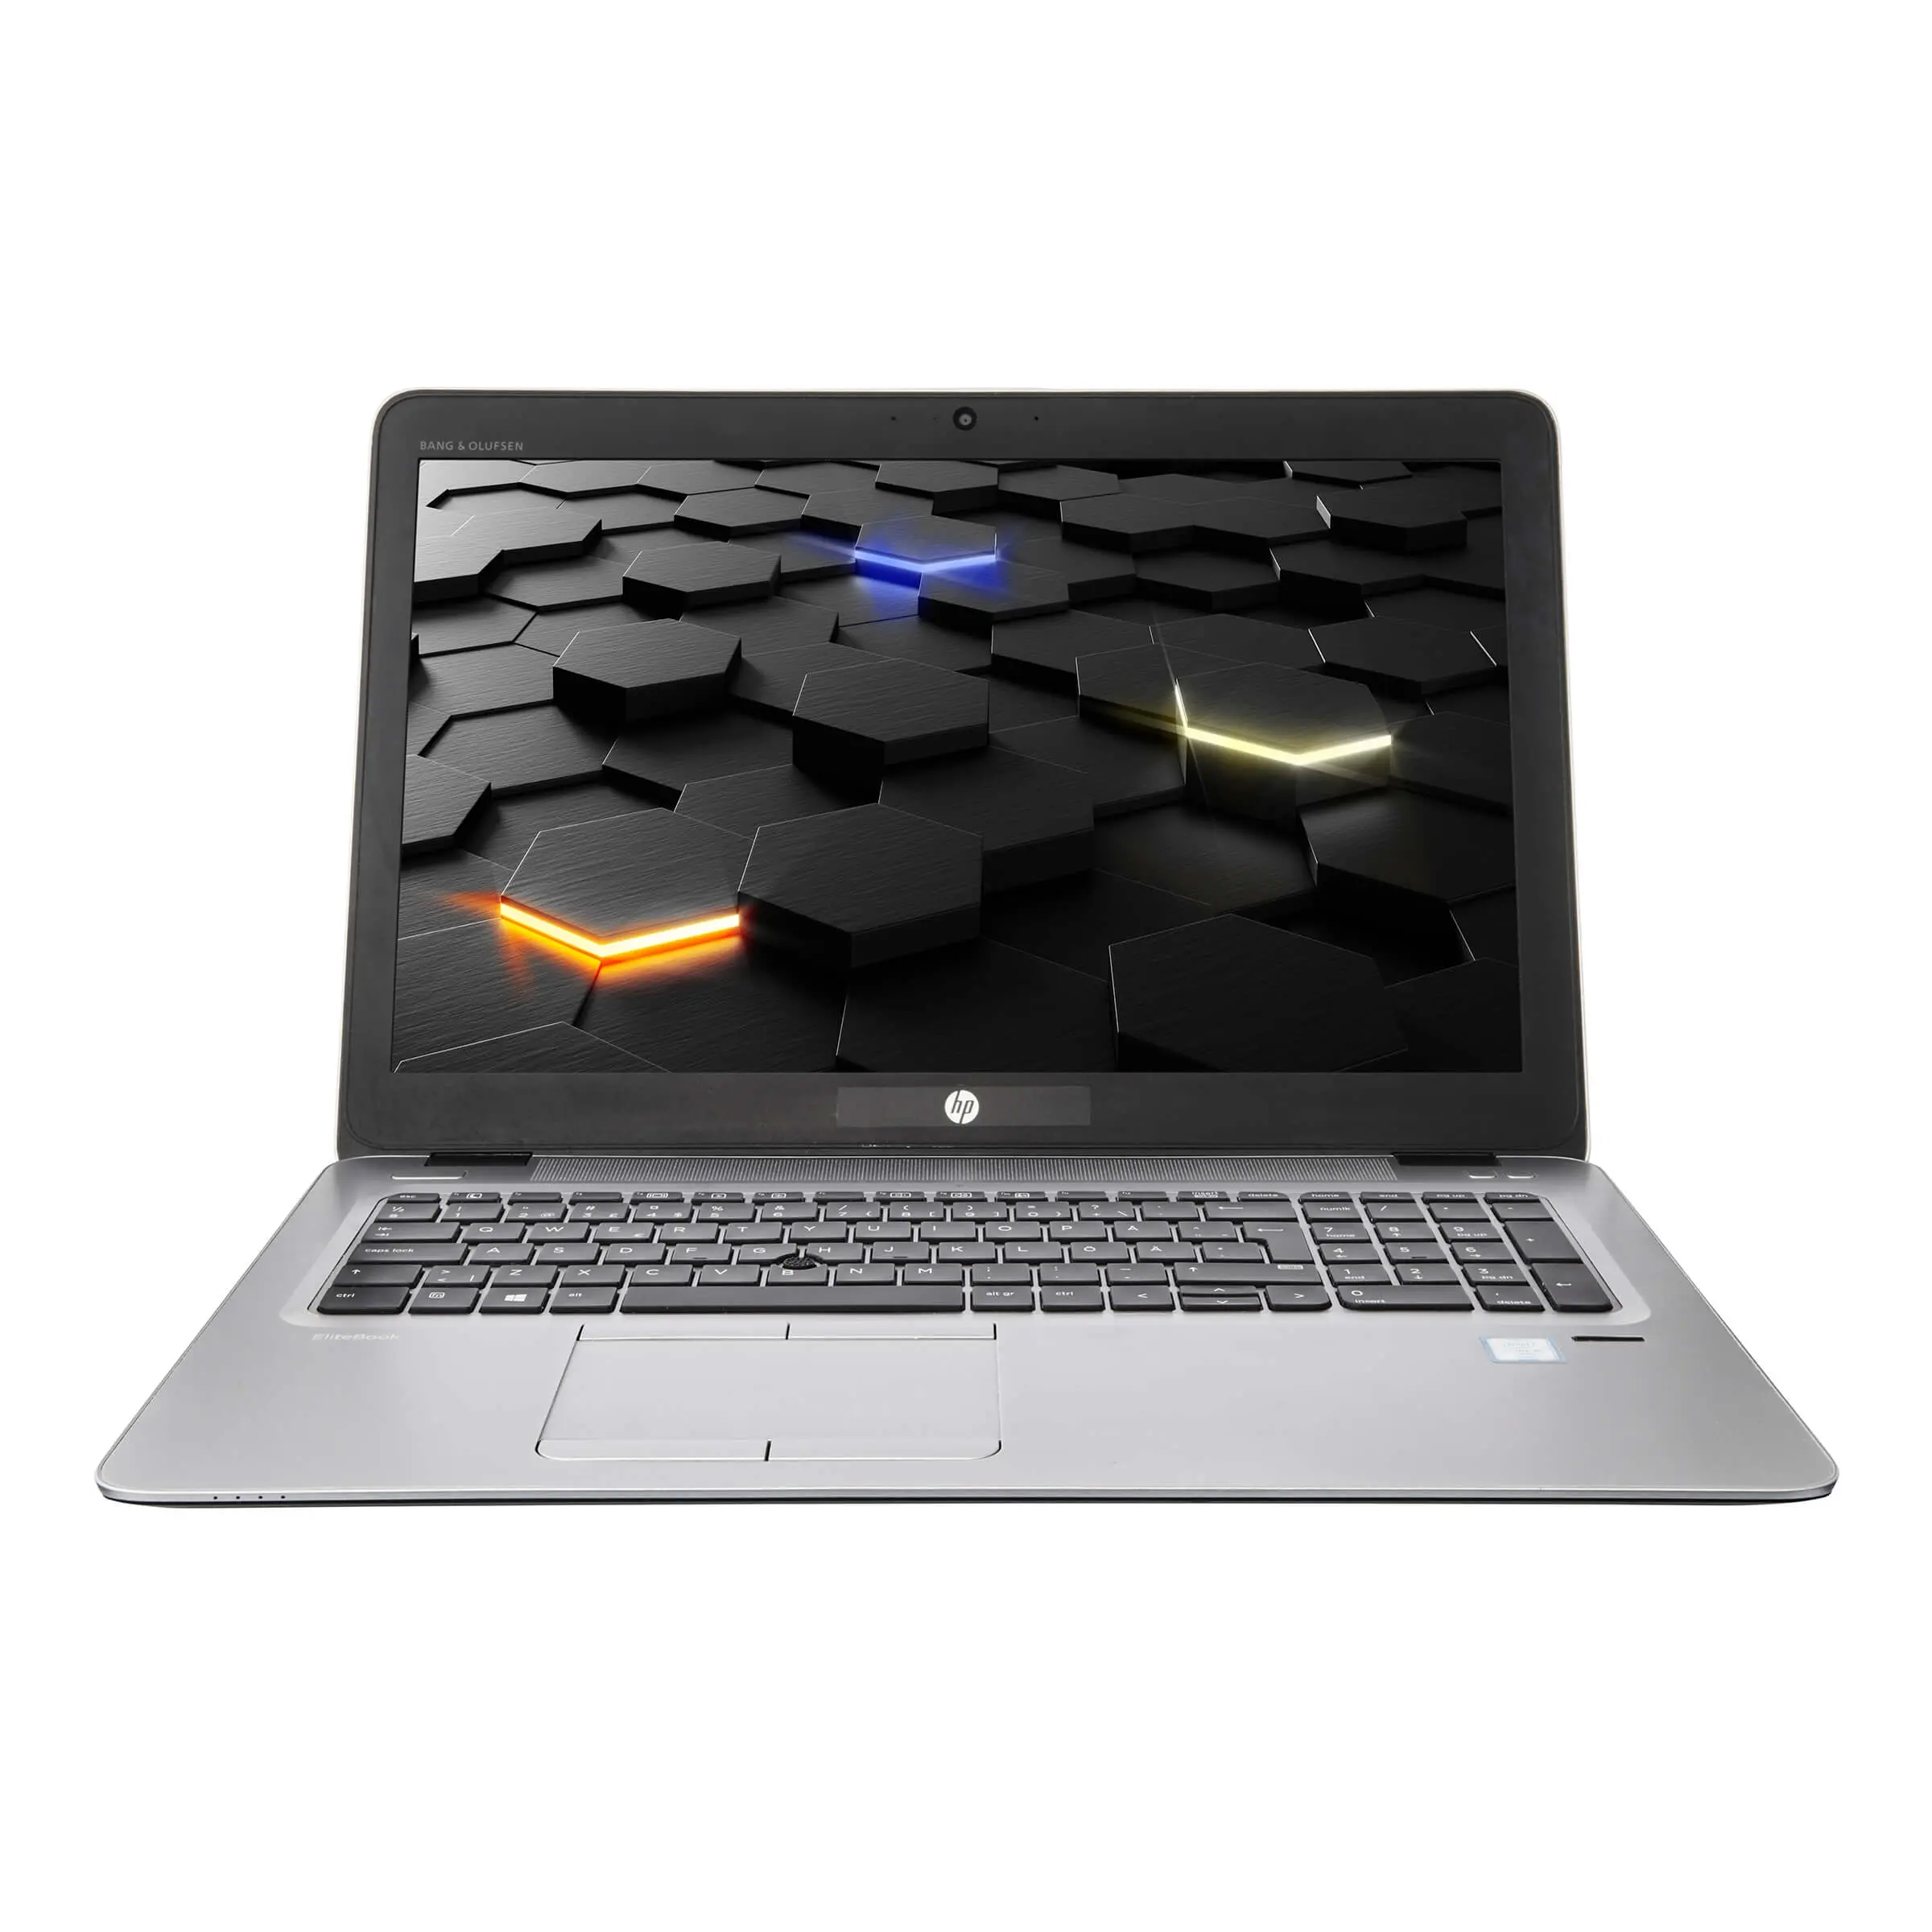 HP EliteBook 850 G3, i5, 15.6 Zoll Full-HD, 32GB, 500GB SSD + 500GB HDD, Webcam, LTE, Windows 10 Pro